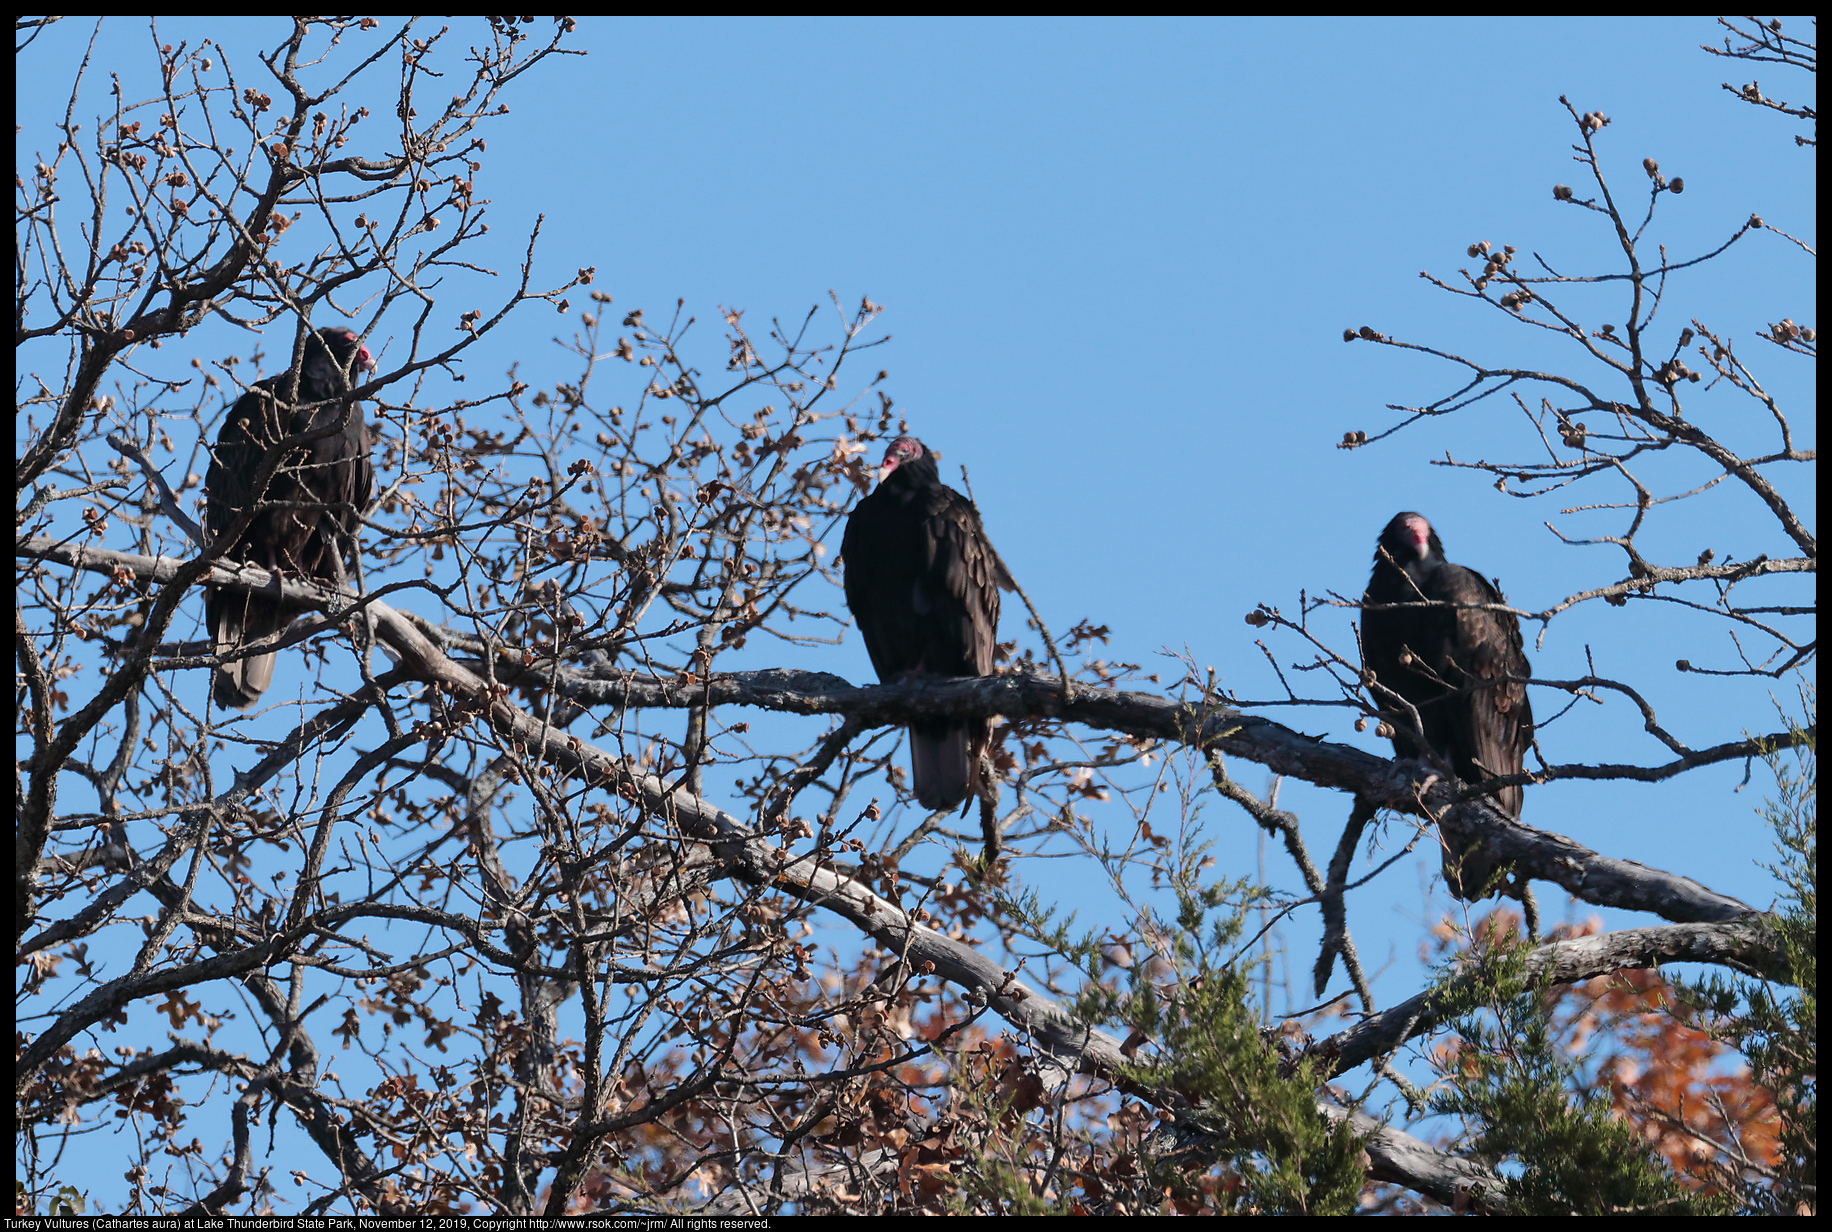 Turkey Vultures (Cathartes aura) at Lake Thunderbird State Park, November 12, 2019